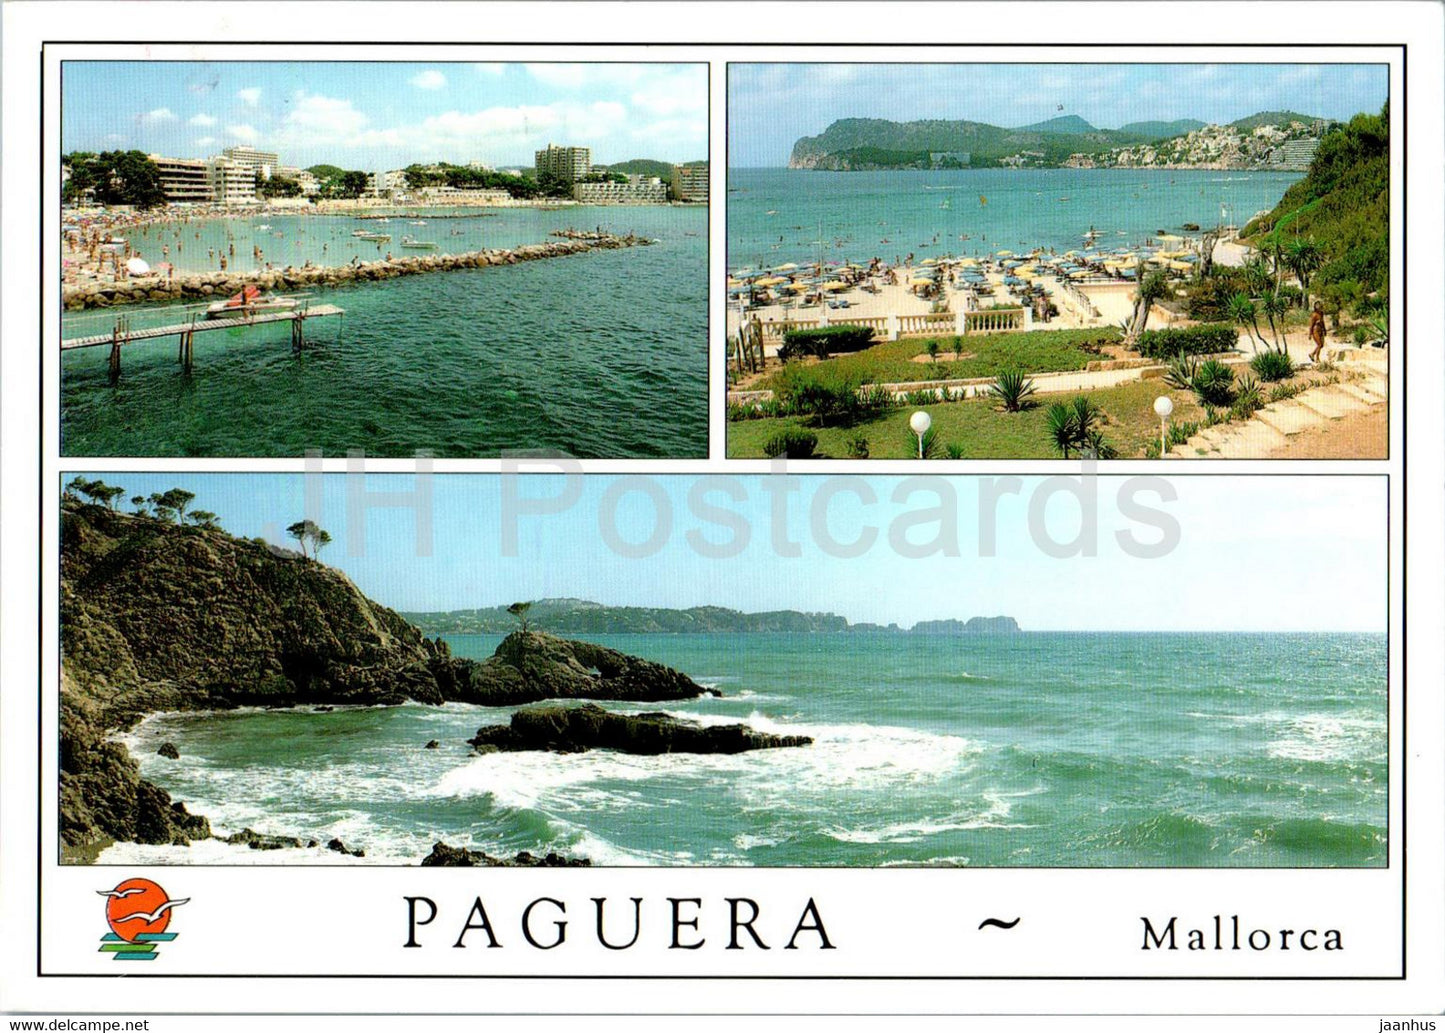 Paguera - Mallorca - 380 - 1999 - Spain - used - JH Postcards